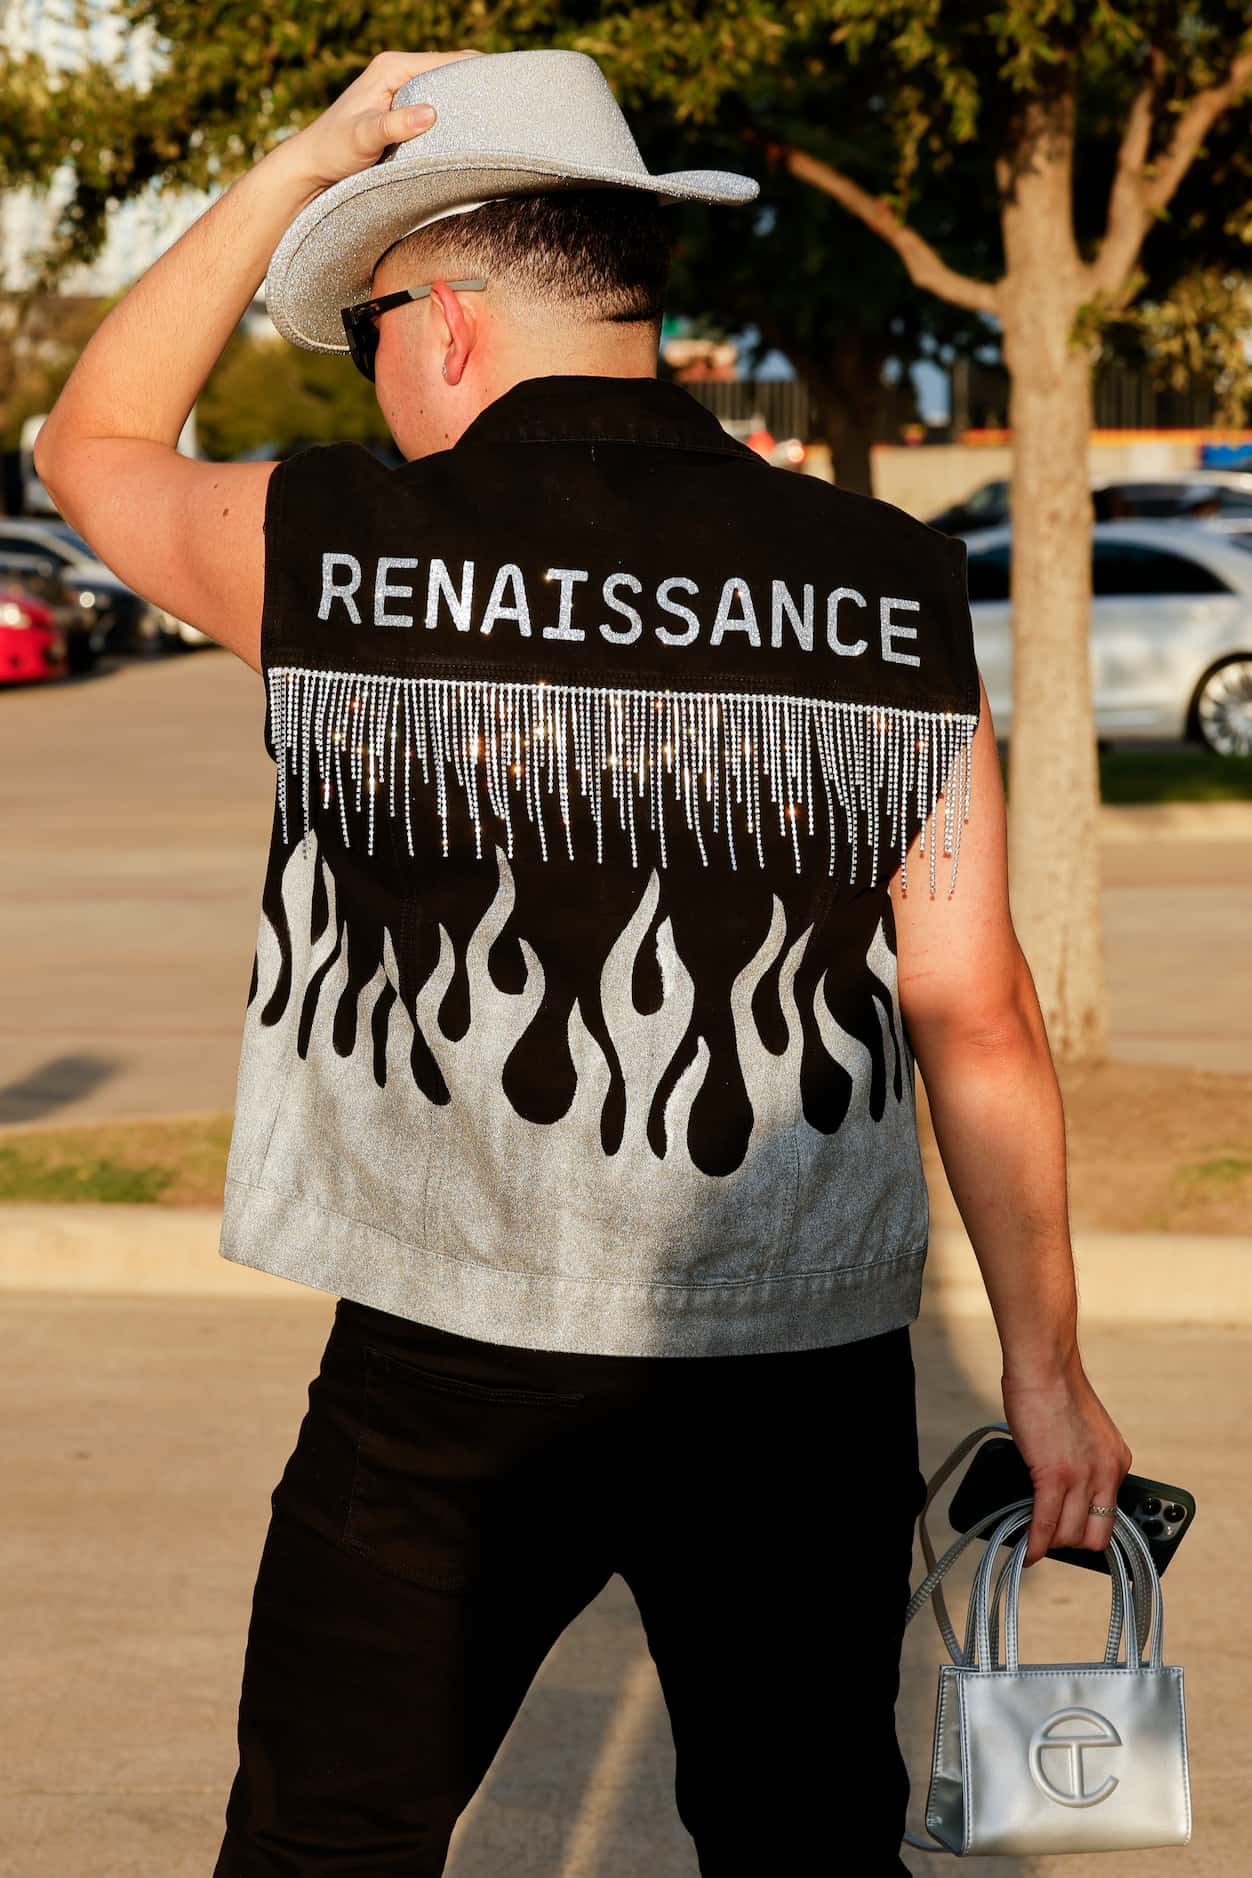 Carlos Monge of Brooklyn, New York shows off his Renaissance vest before Beyoncé’s...